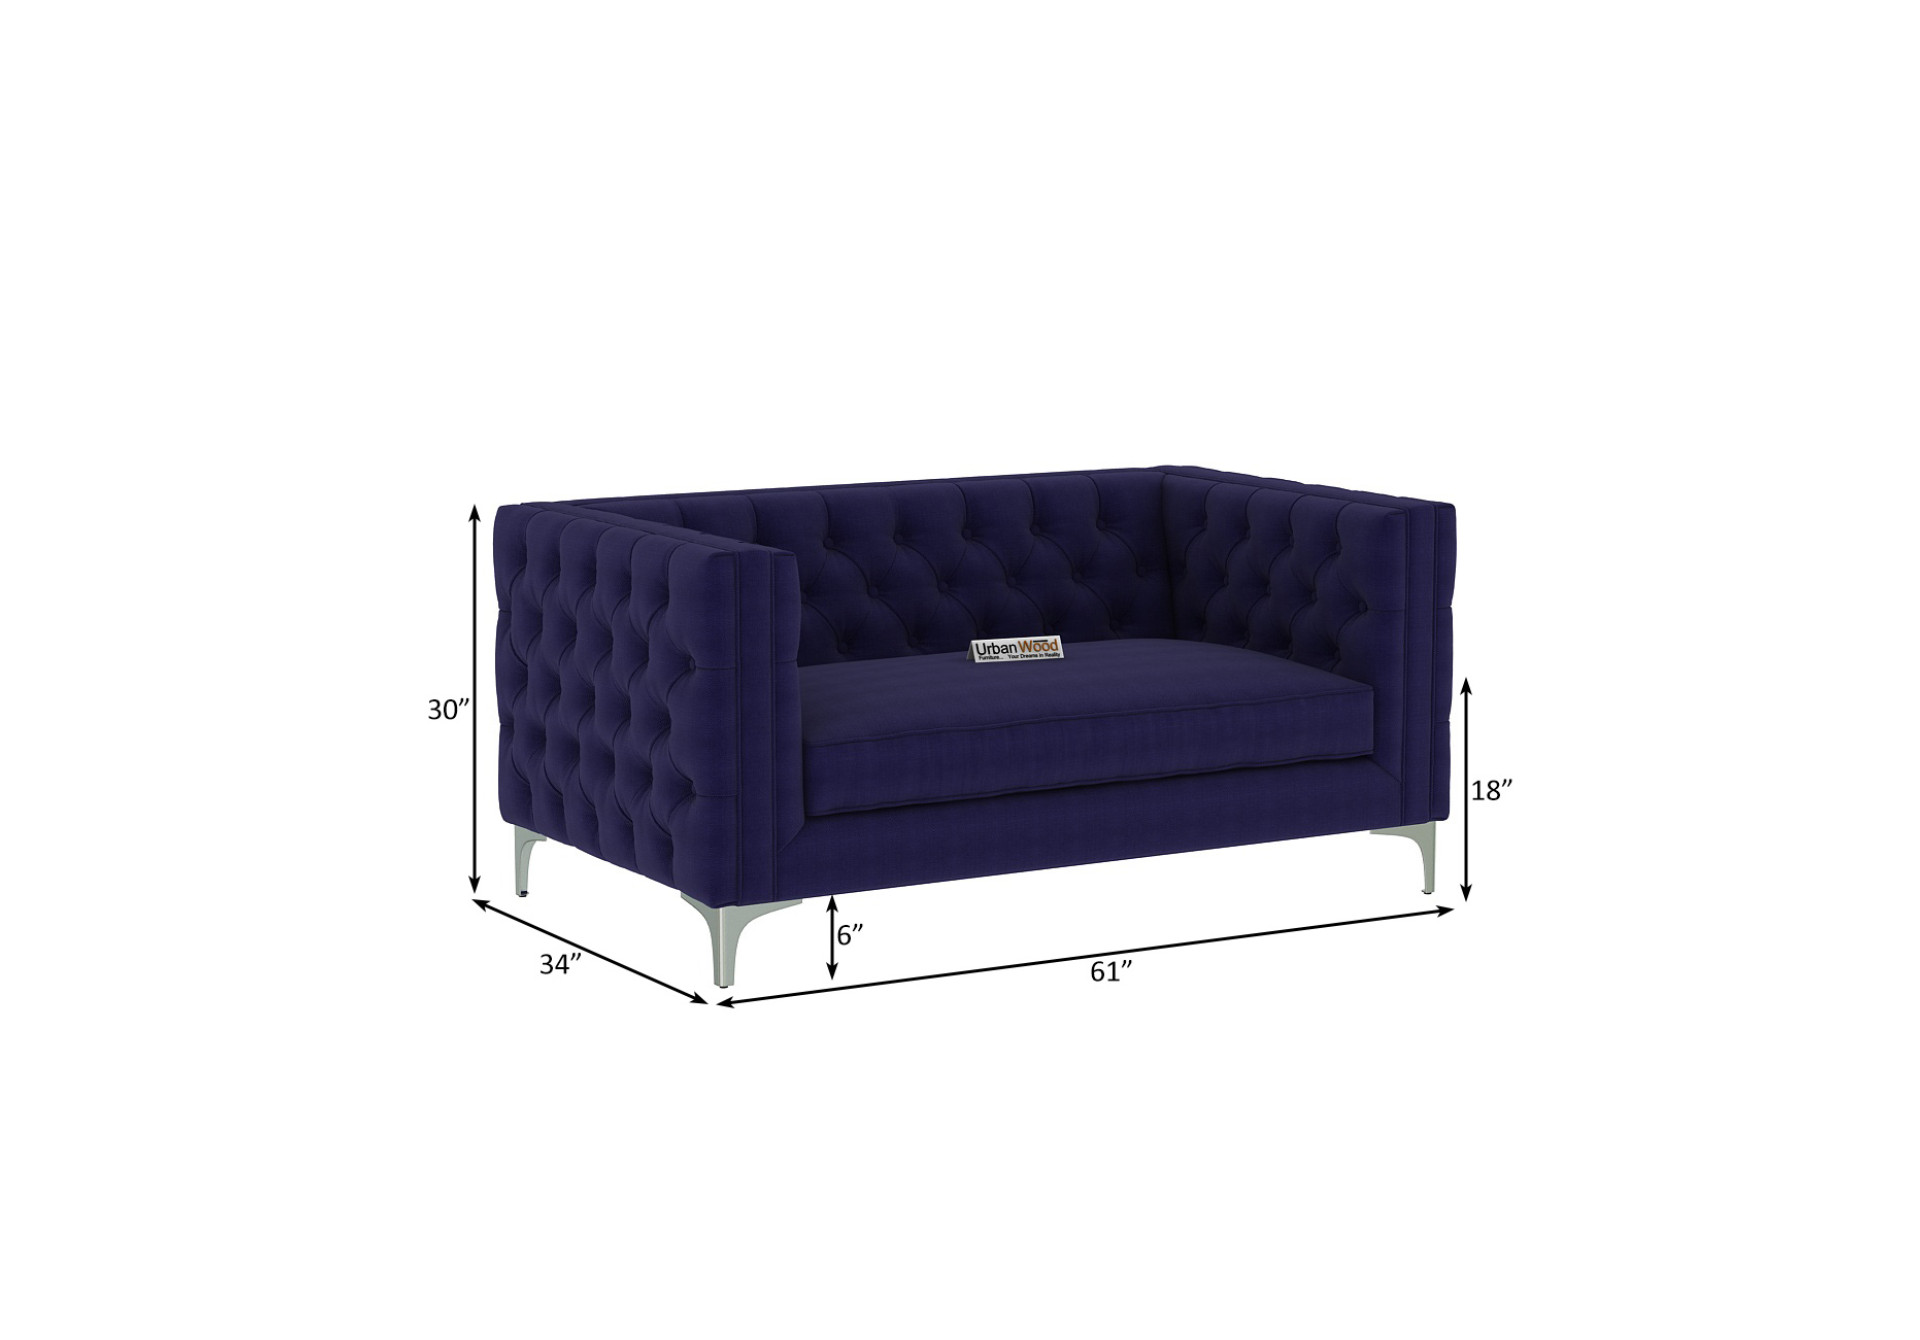 Curio 2+1+1 Seater Fabric Sofa (Cotton, Navy Blue)